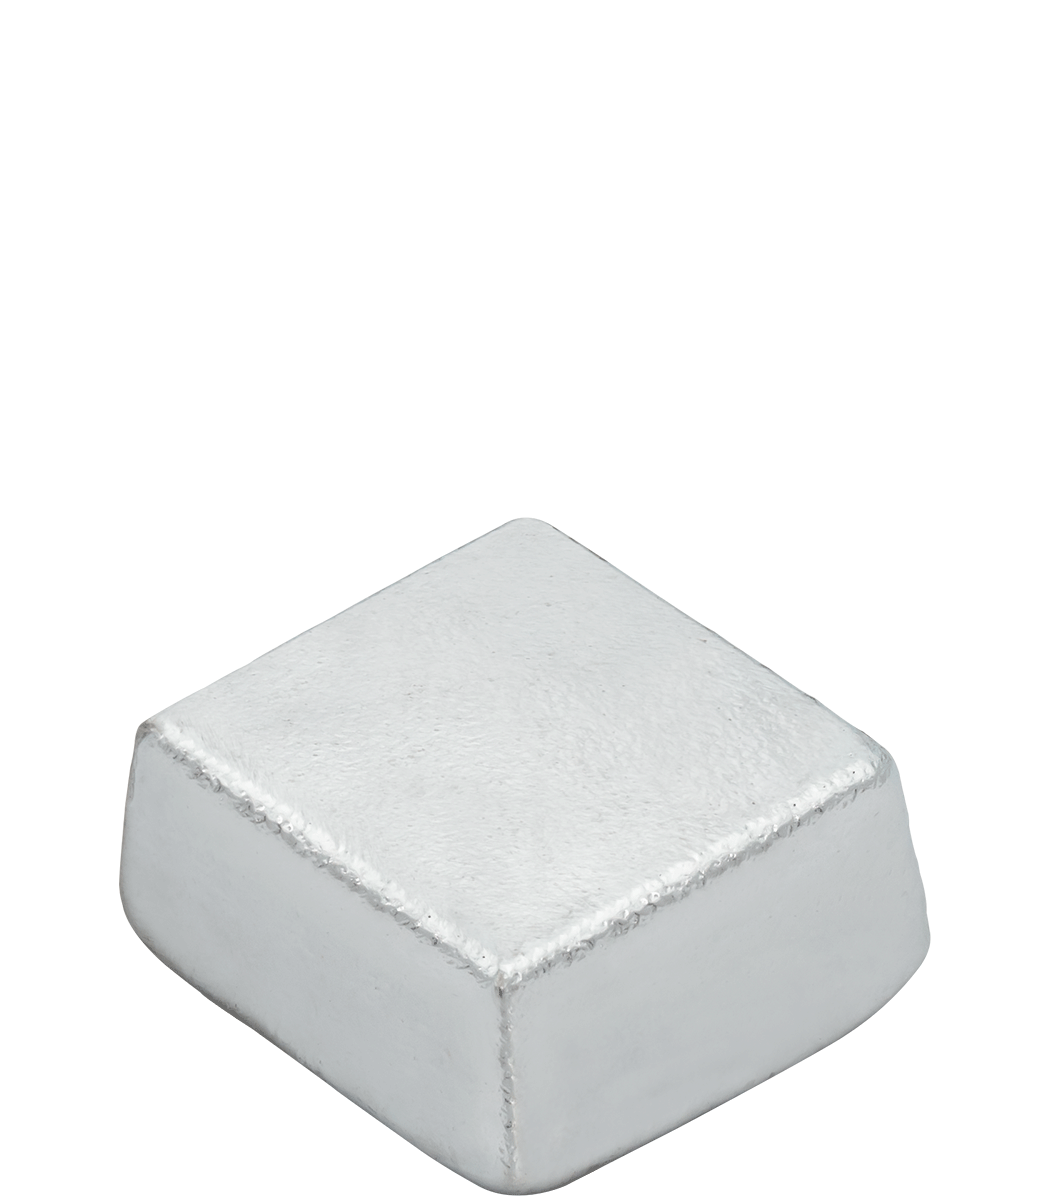 Wesbite Name: Zinc Blocks